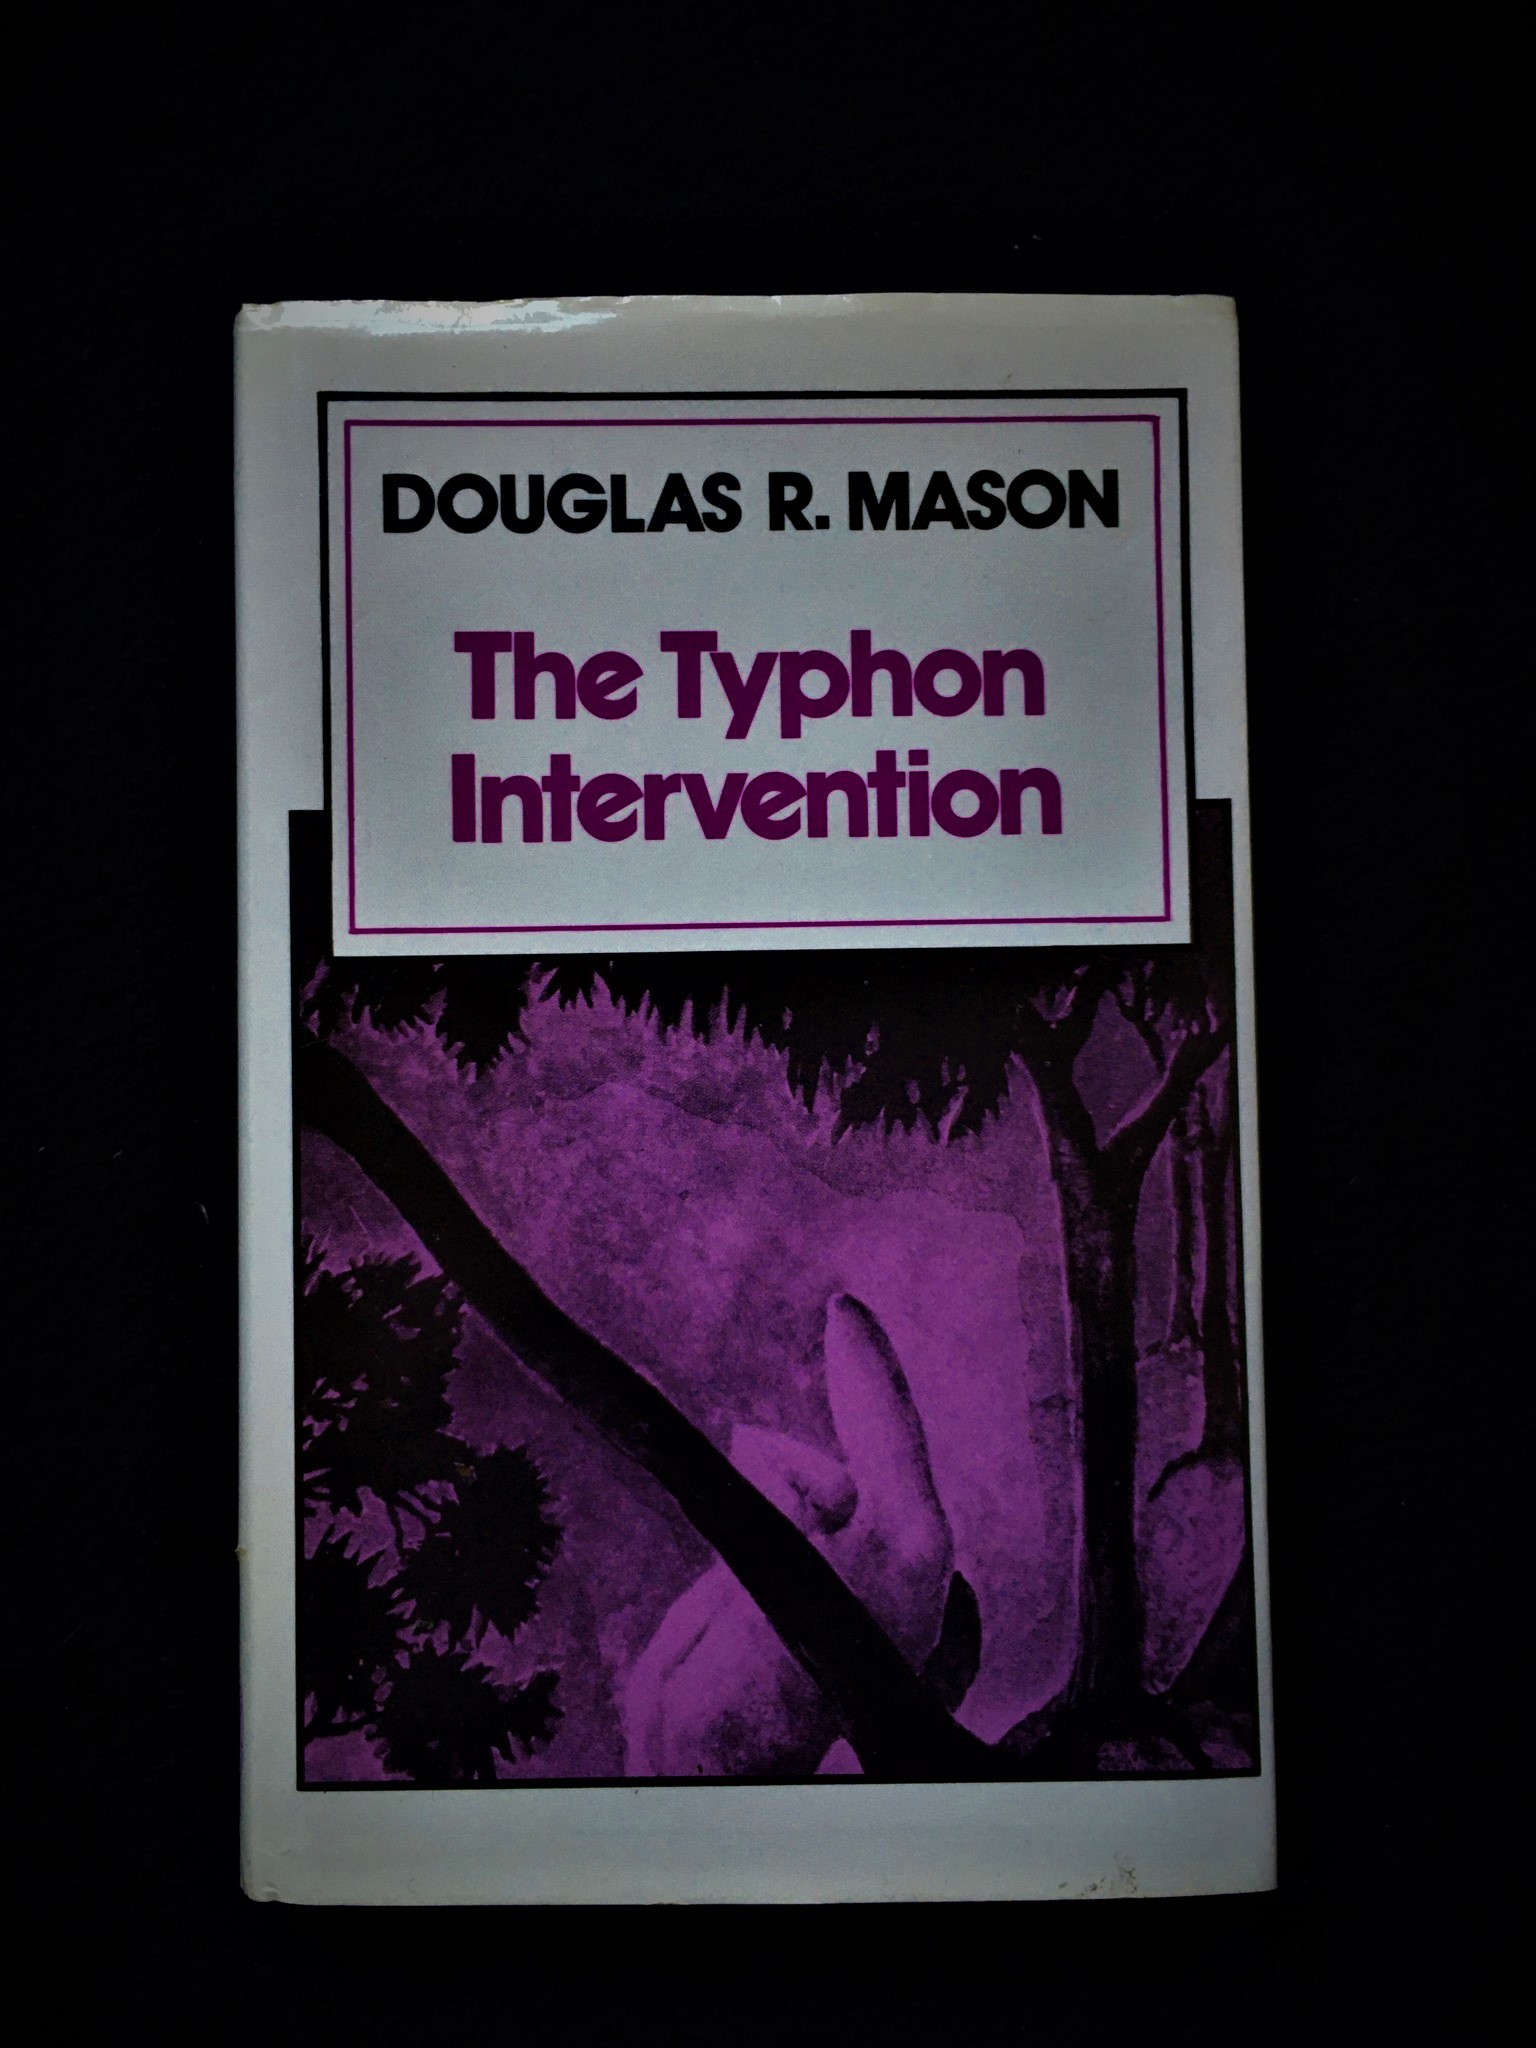 The Typhon Intervention by Douglas R. Mason